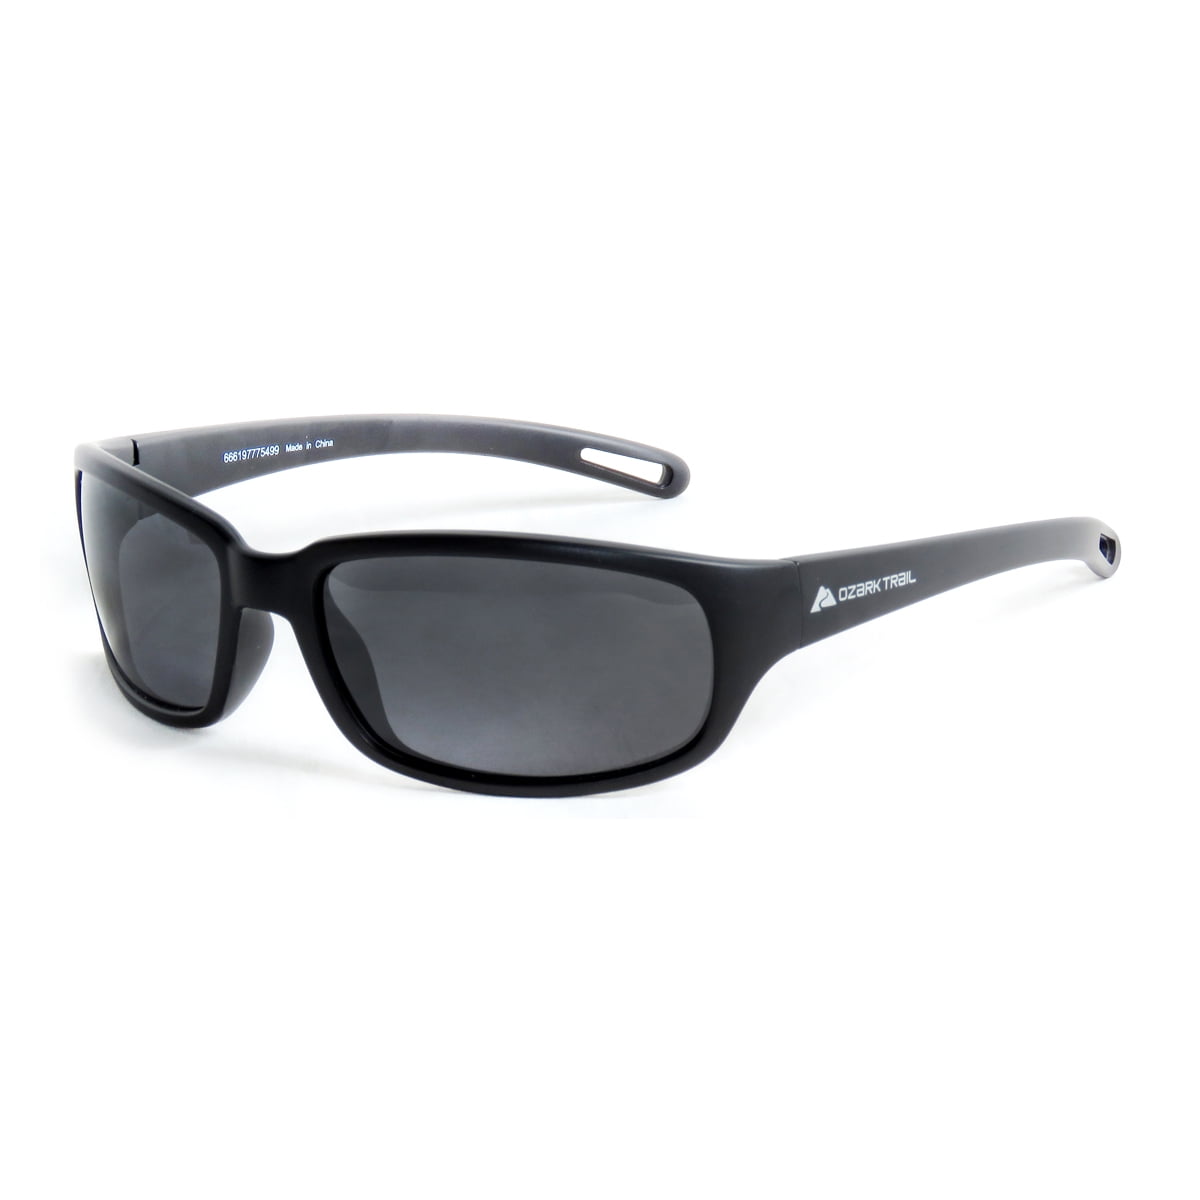 Details about   BERKLEY CLASSIC Fishing Gear Black Neoprene Sunglasses Retainer BABNR 1342122 